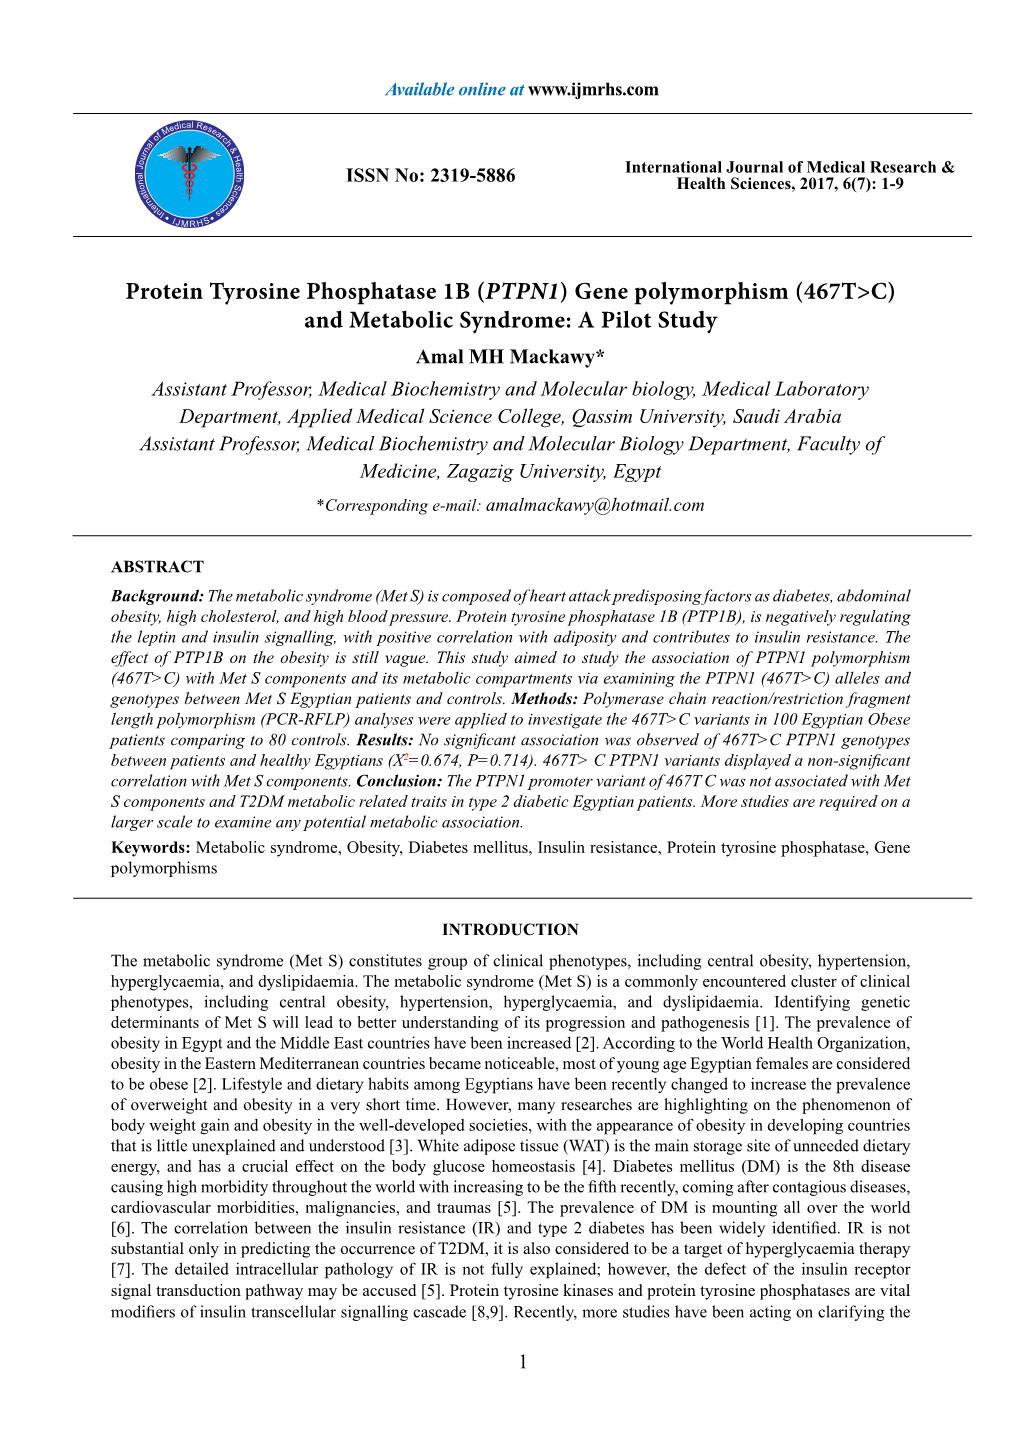 Protein Tyrosine Phosphatase 1B (PTPN1) Gene Polymorphism (467T